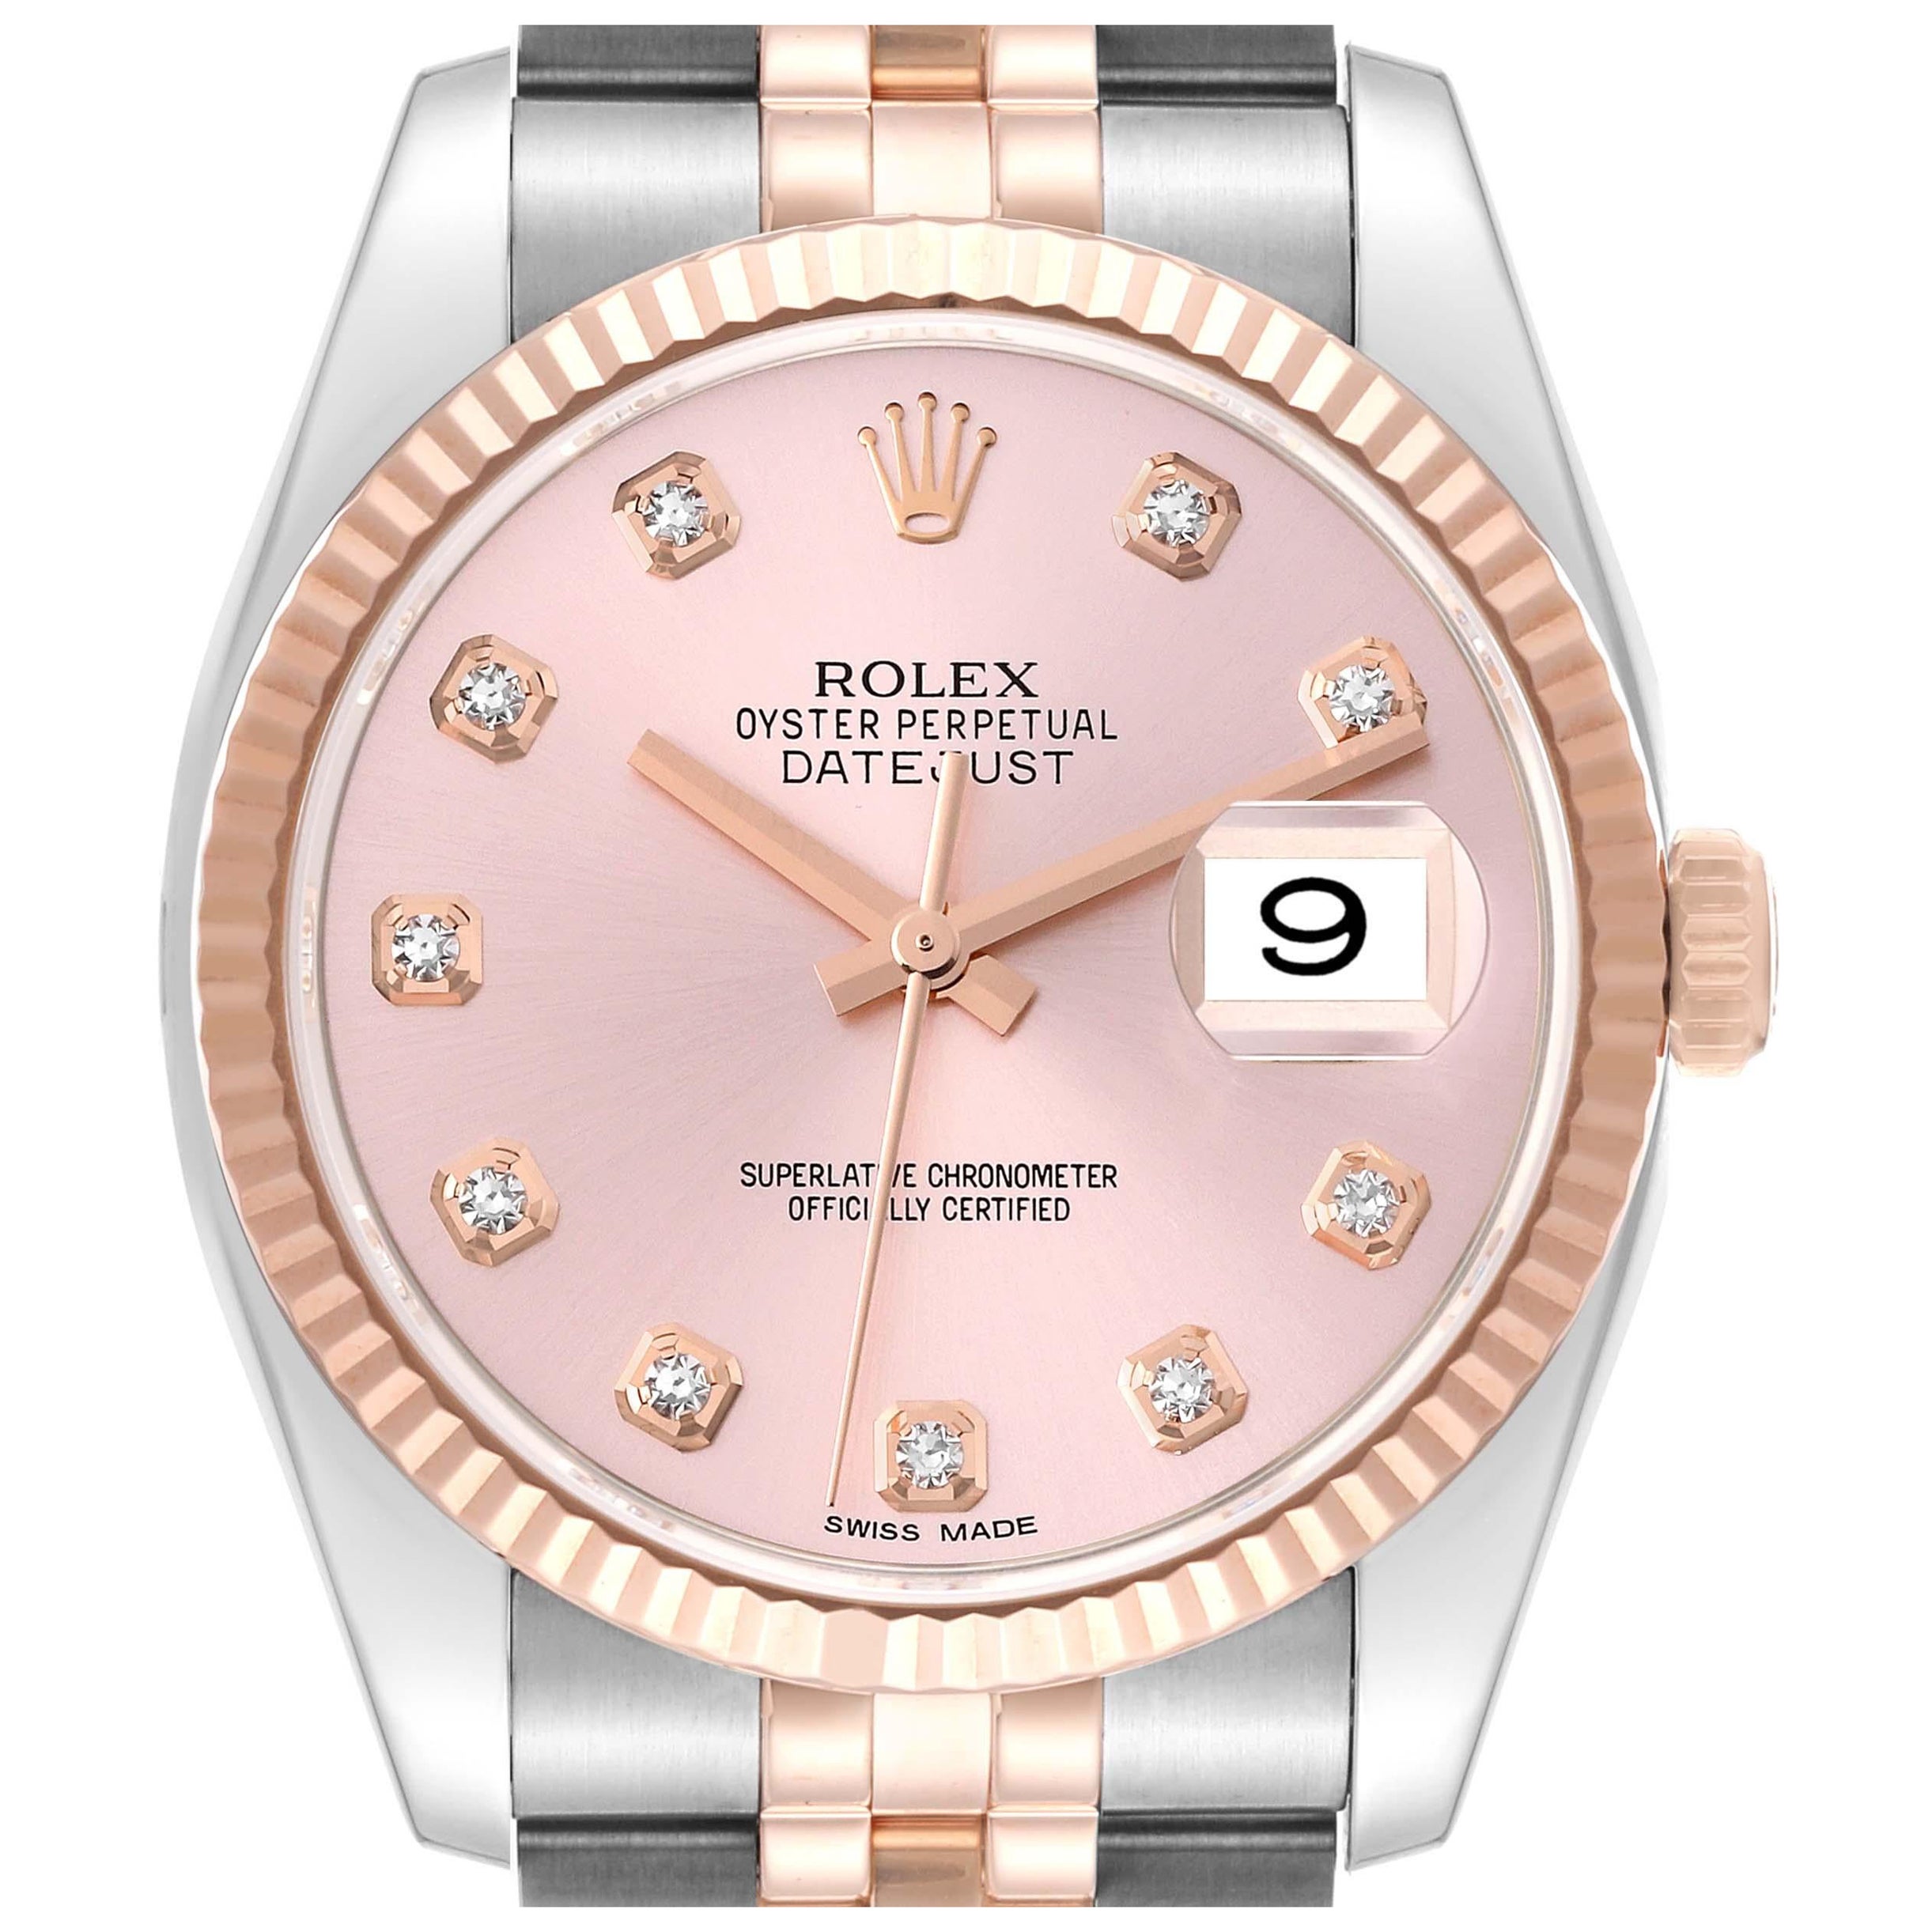 Rolex Datejust Steel Rose Gold Pink Diamond Dial Mens Watch 116231